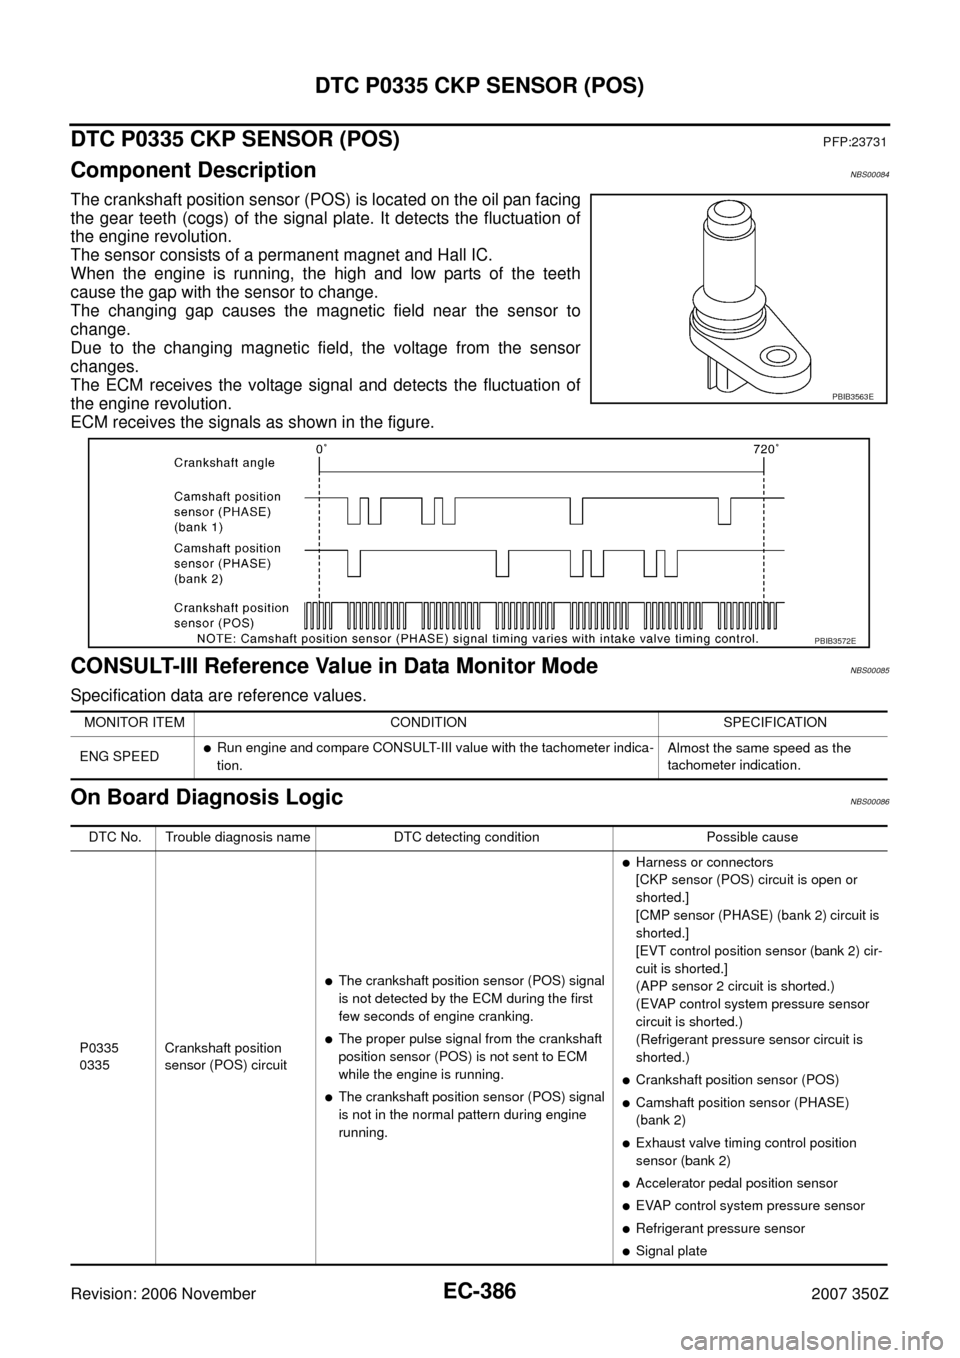 NISSAN 350Z 2007 Z33 Engine Control Workshop Manual EC-386
DTC P0335 CKP SENSOR (POS)
Revision: 2006 November2007 350Z
DTC P0335 CKP SENSOR (POS)PFP:23731
Component DescriptionNBS00084
The crankshaft position sensor (POS) is located on the oil pan faci